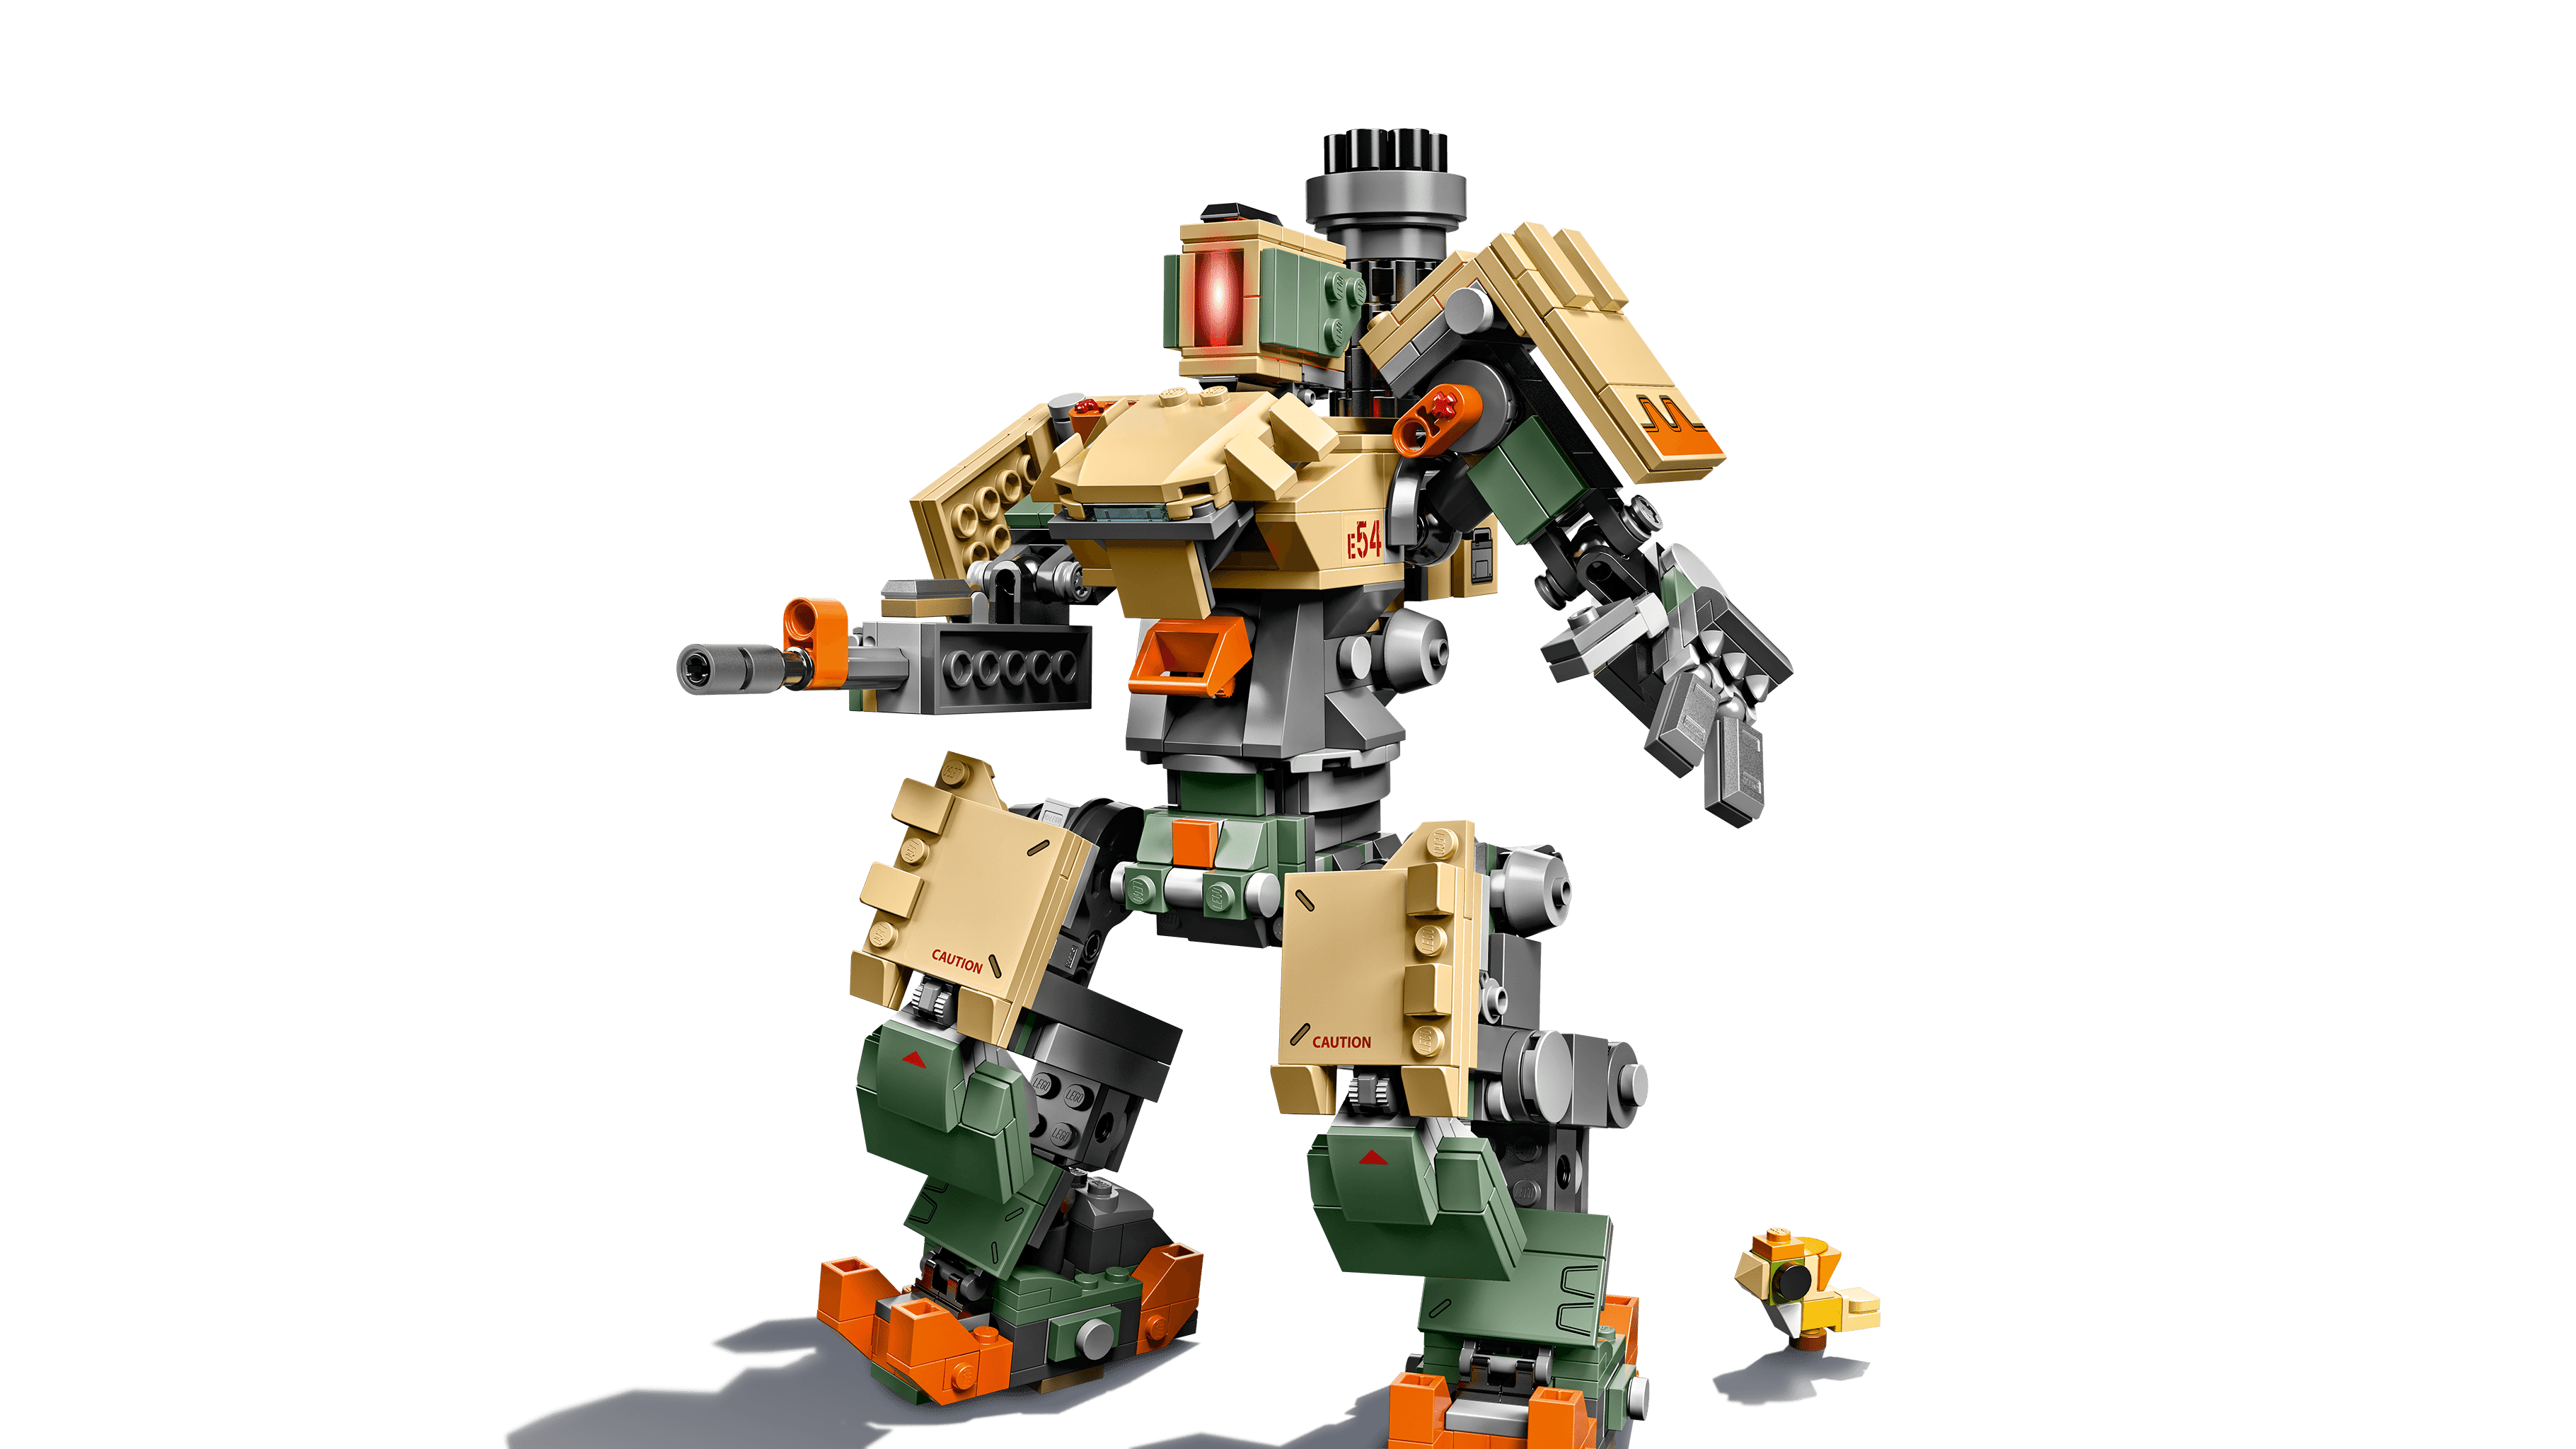 LEGO Overwatch 75974 Bastion Building Robot Figure -